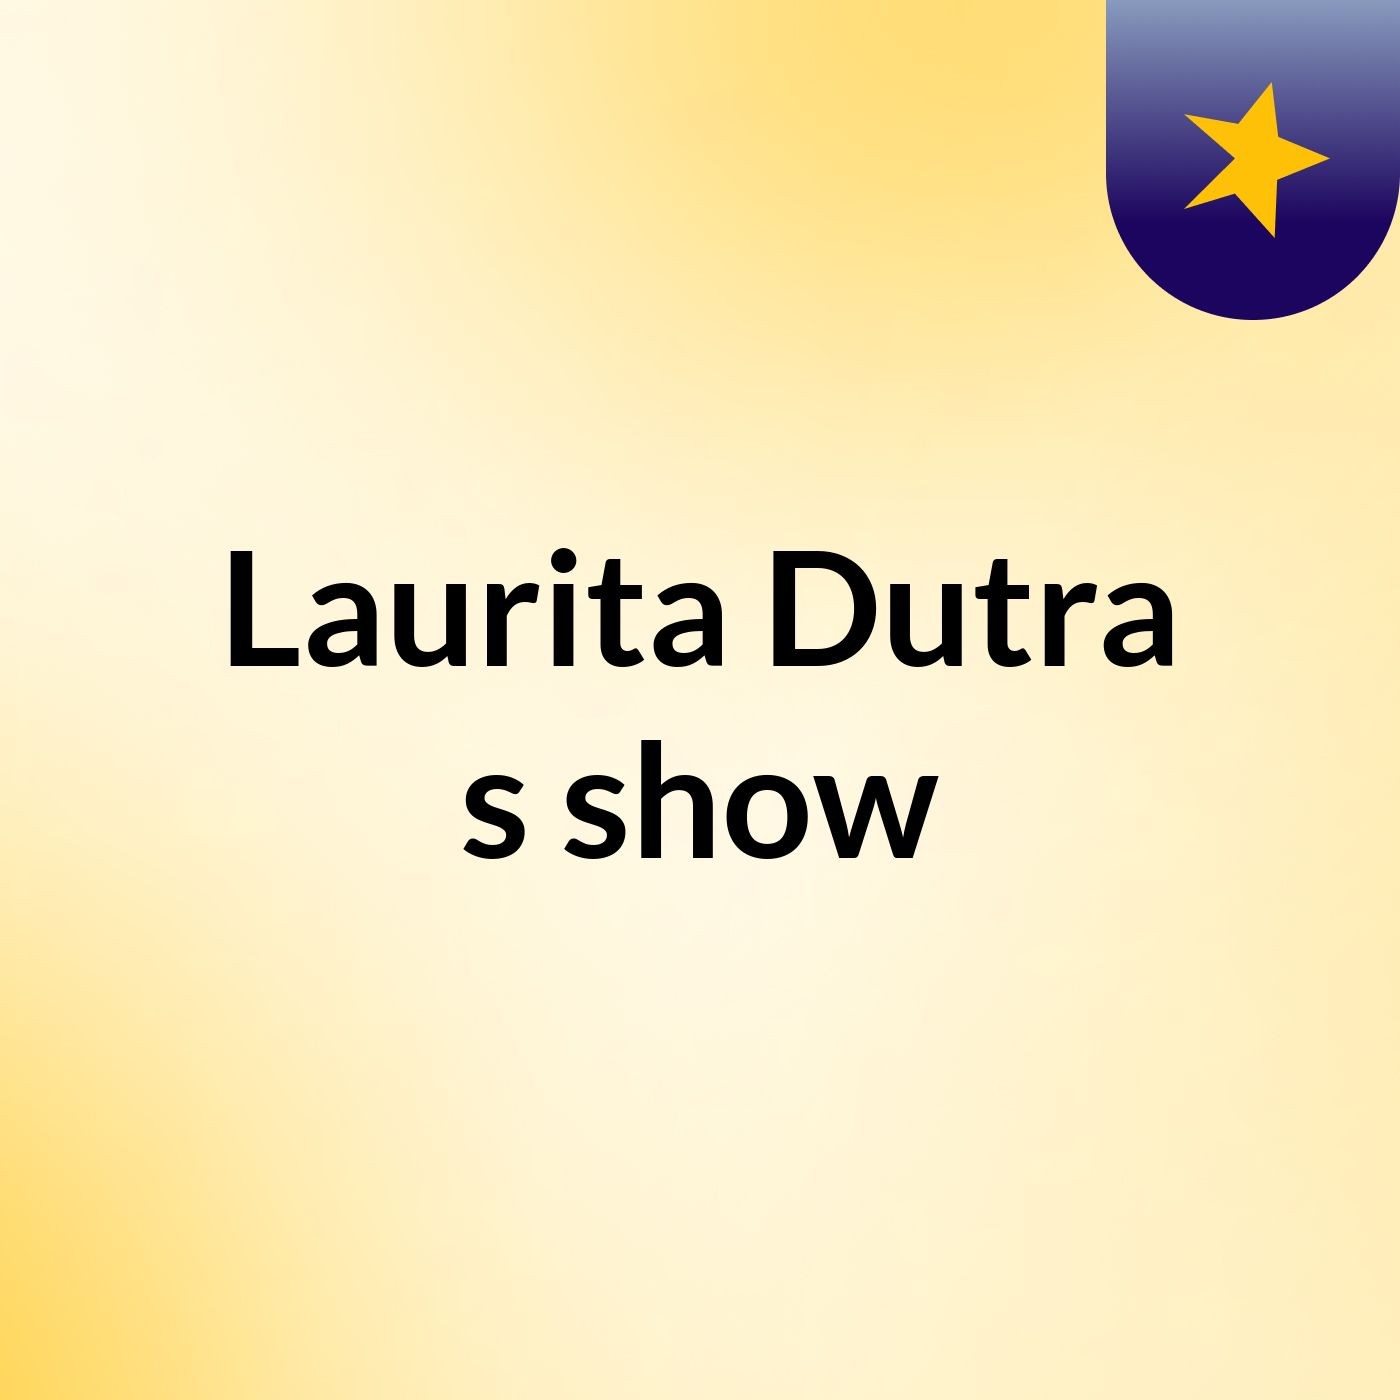 Laurita Dutra's show